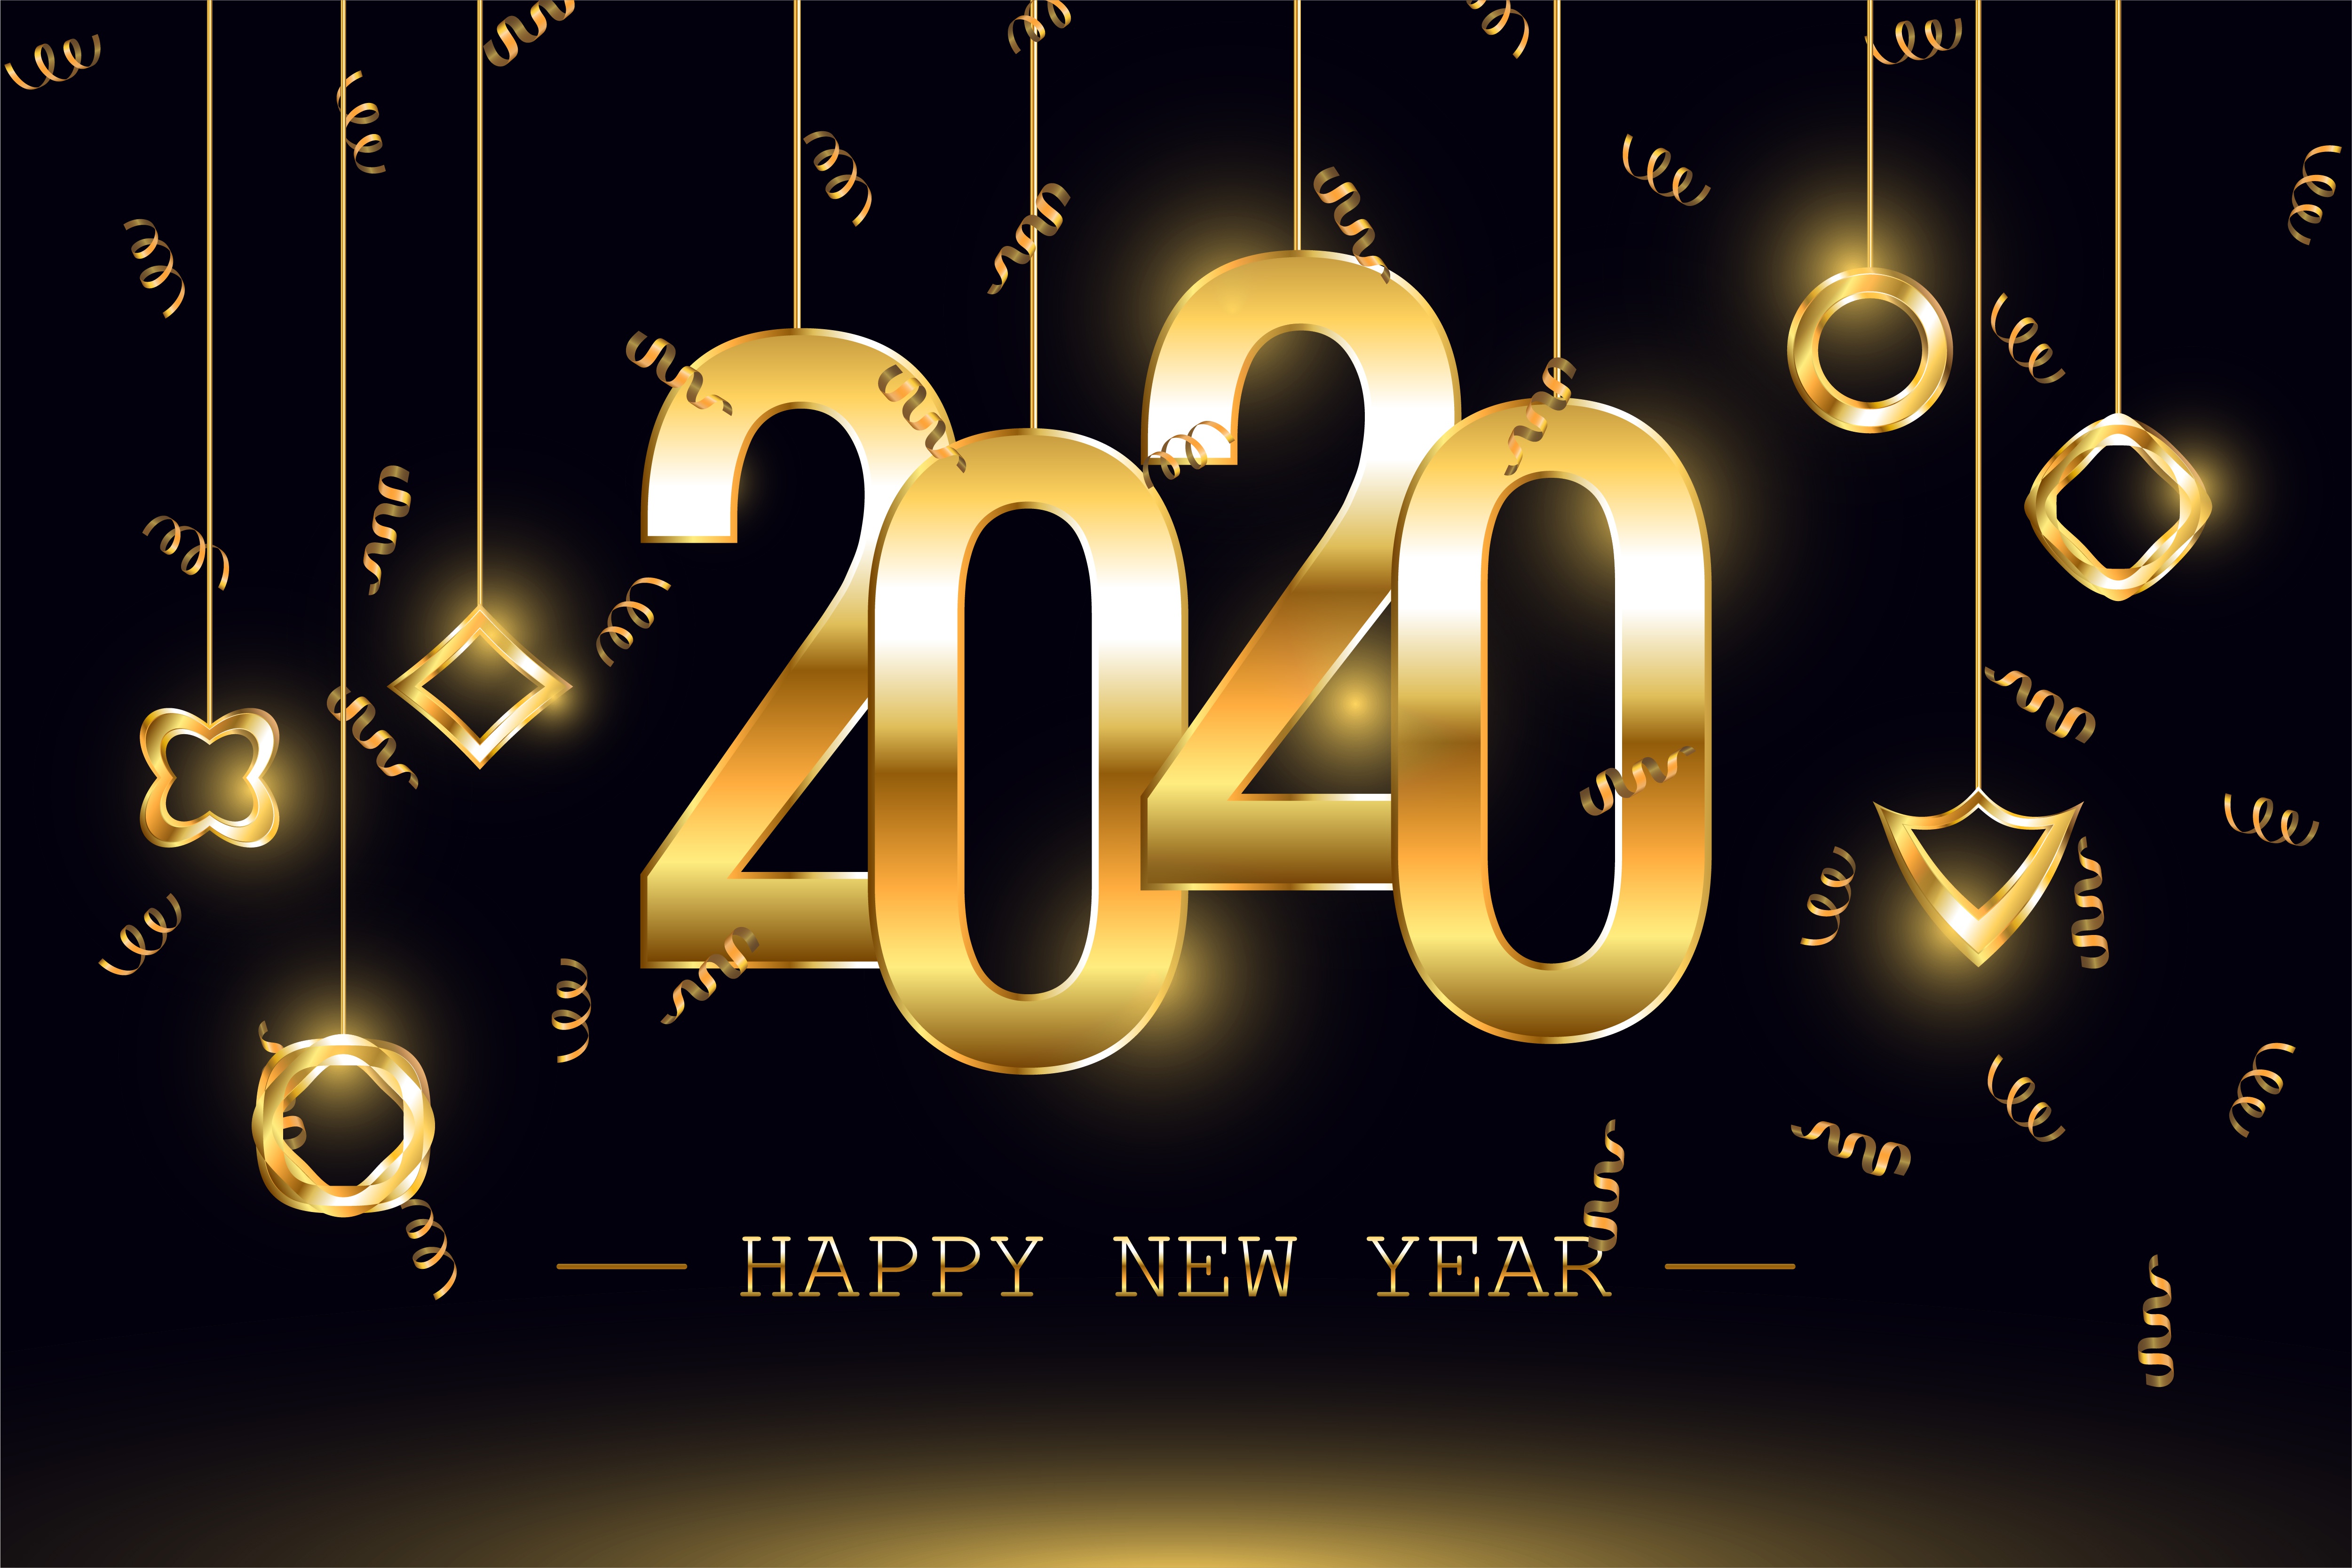 New Year 2020 4k Ultra HD Wallpaper